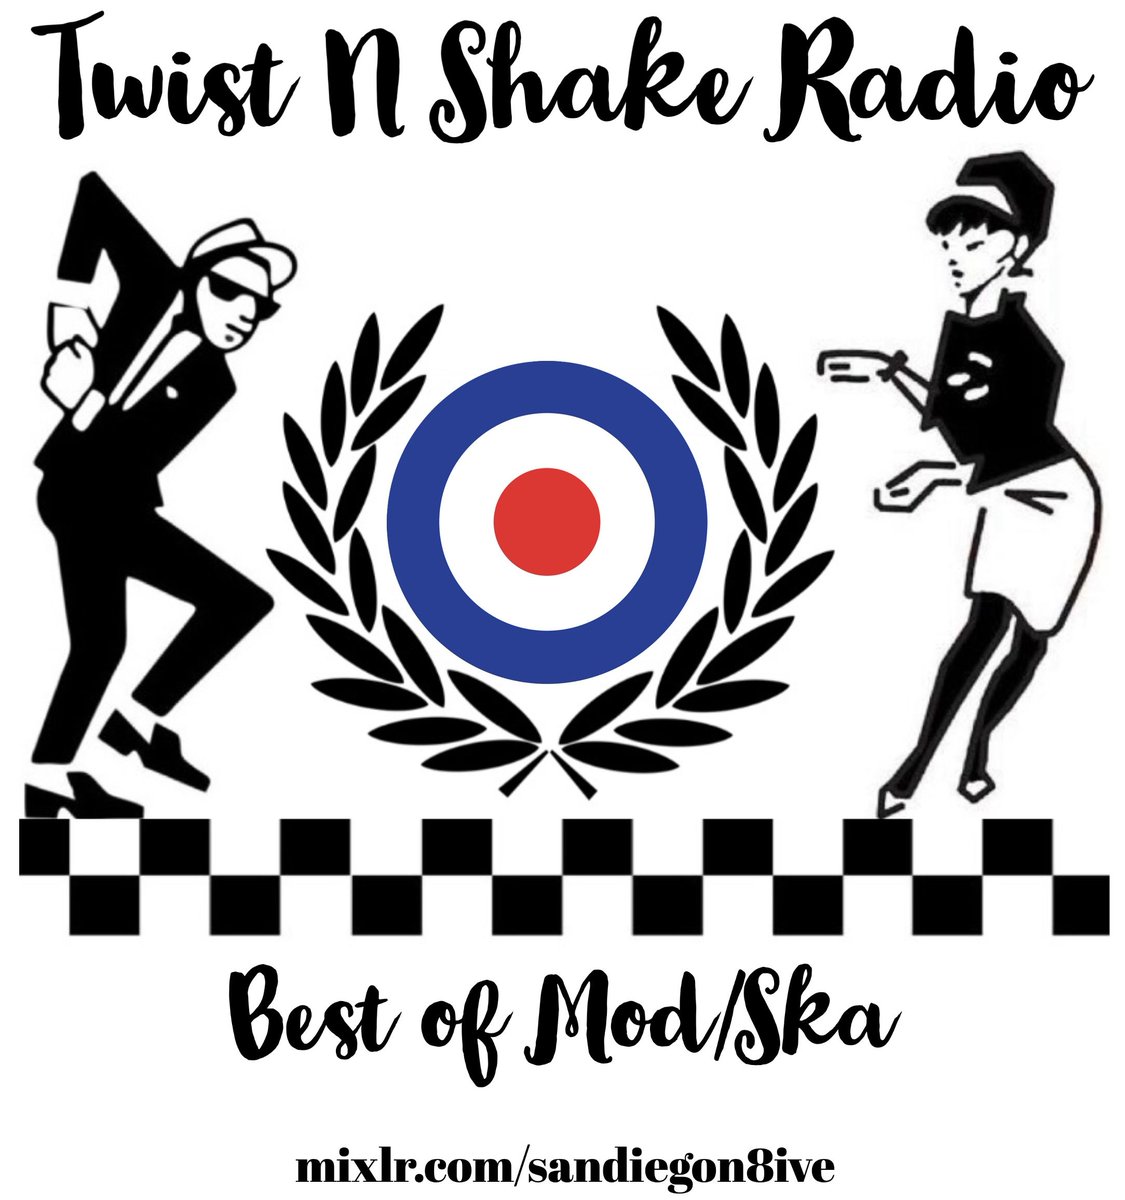 Now Playing on Mod Radio Uk - Twist N Shake by @sandiegon8ive